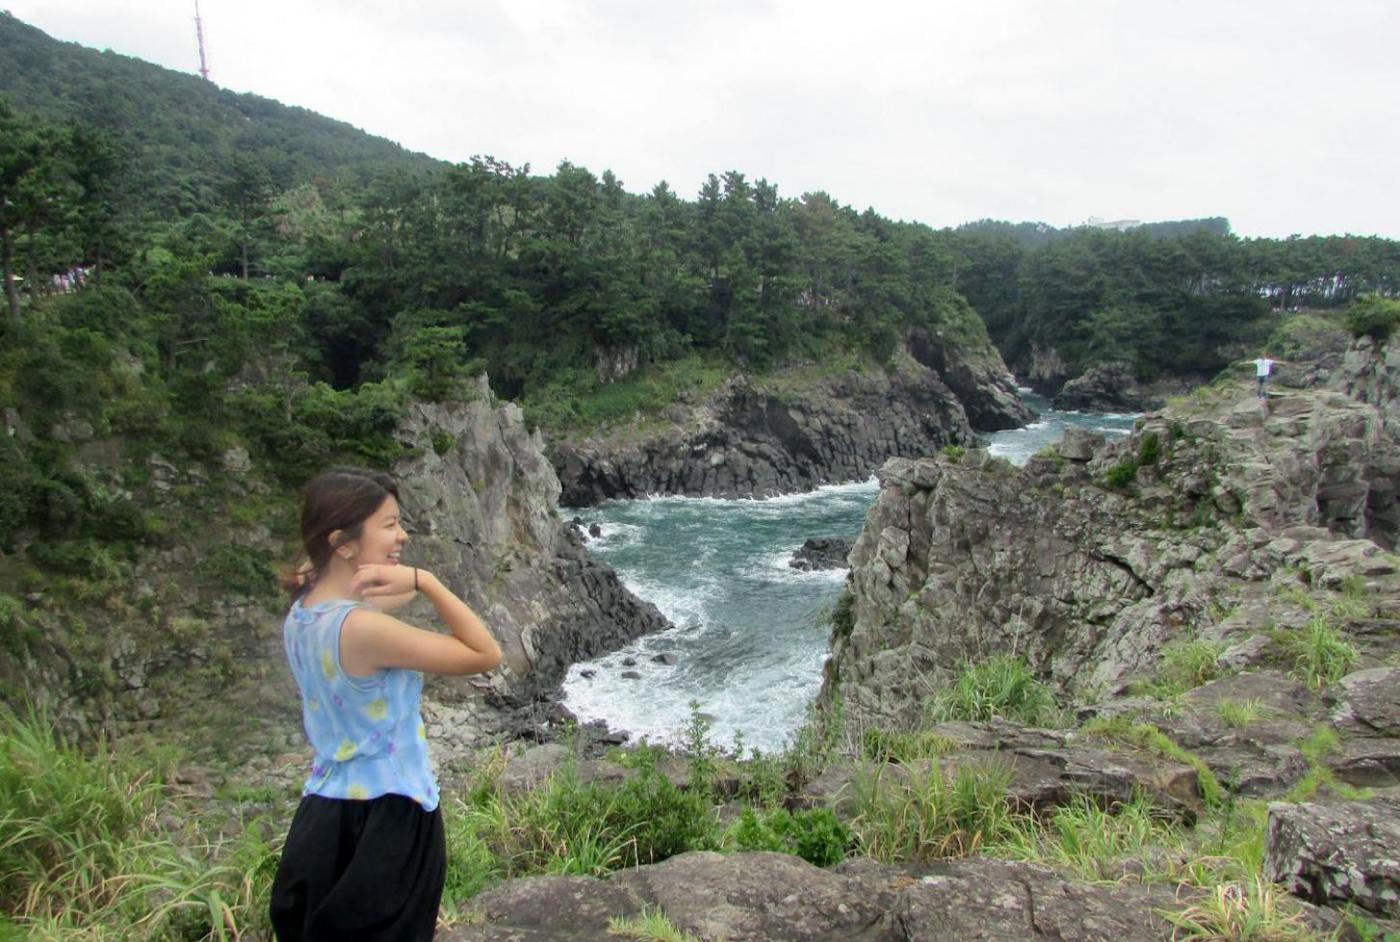 Tina on Jeju island in South Korea